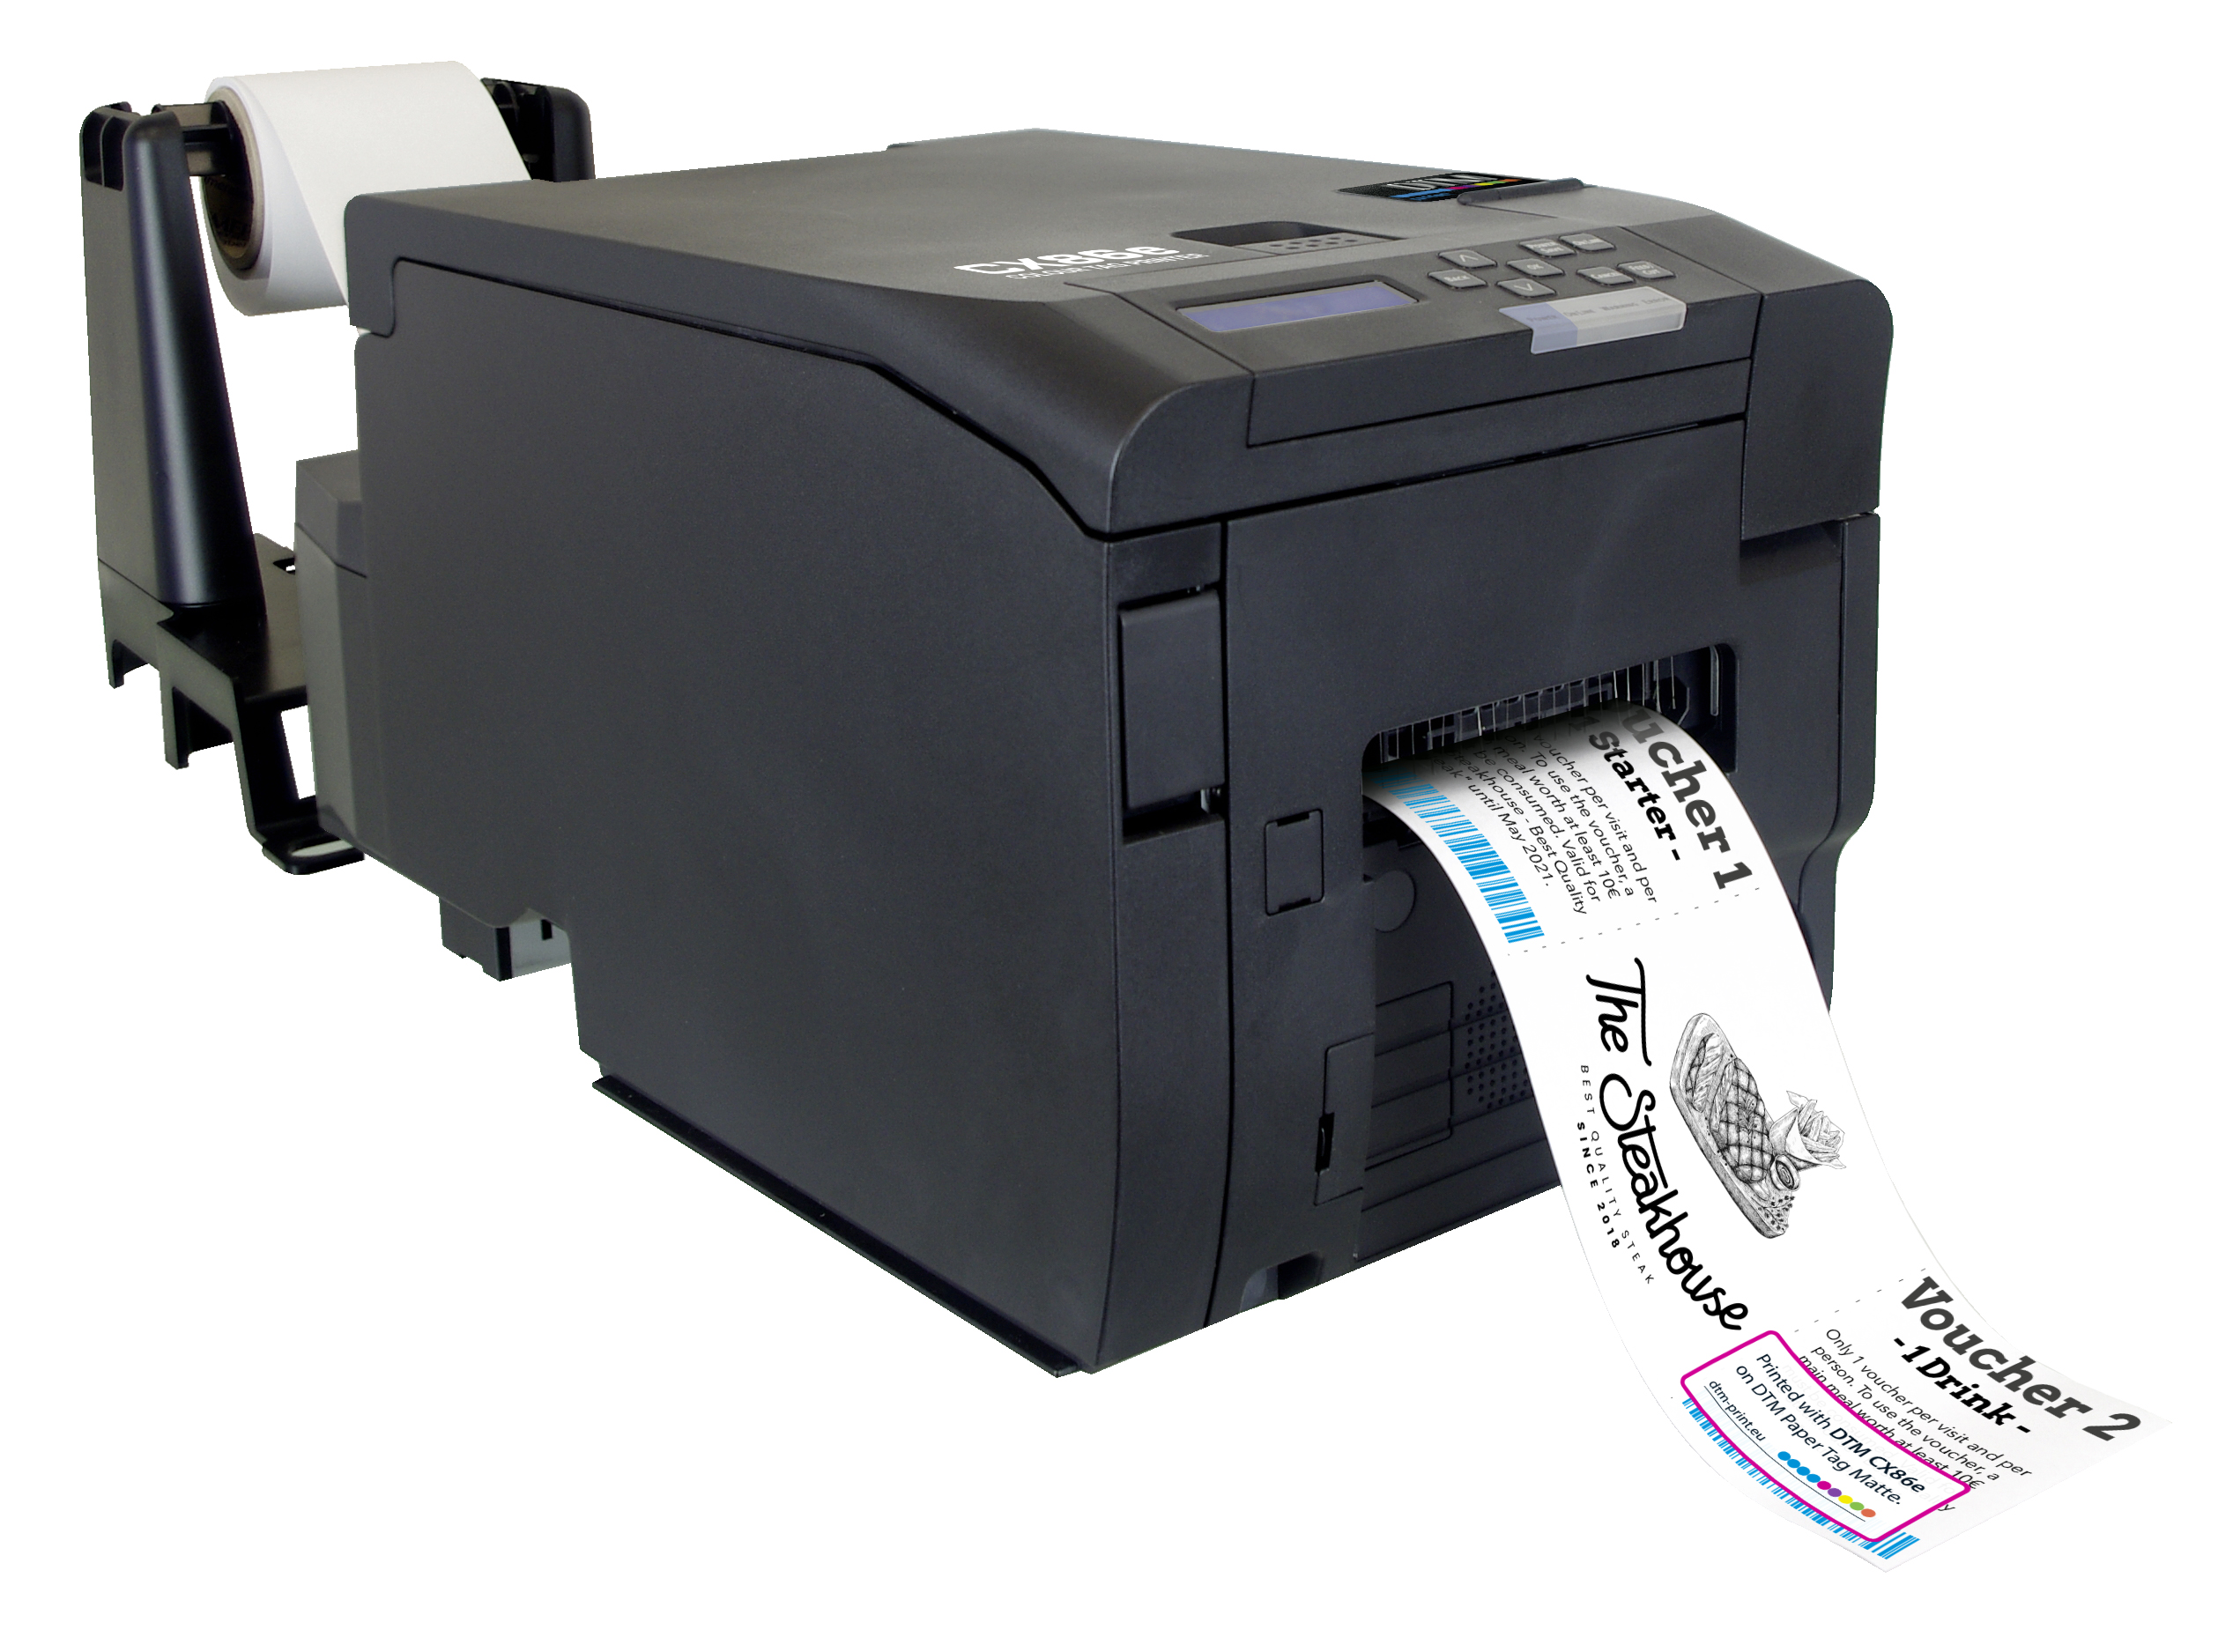 DTM CX86e Colour Tag Printer